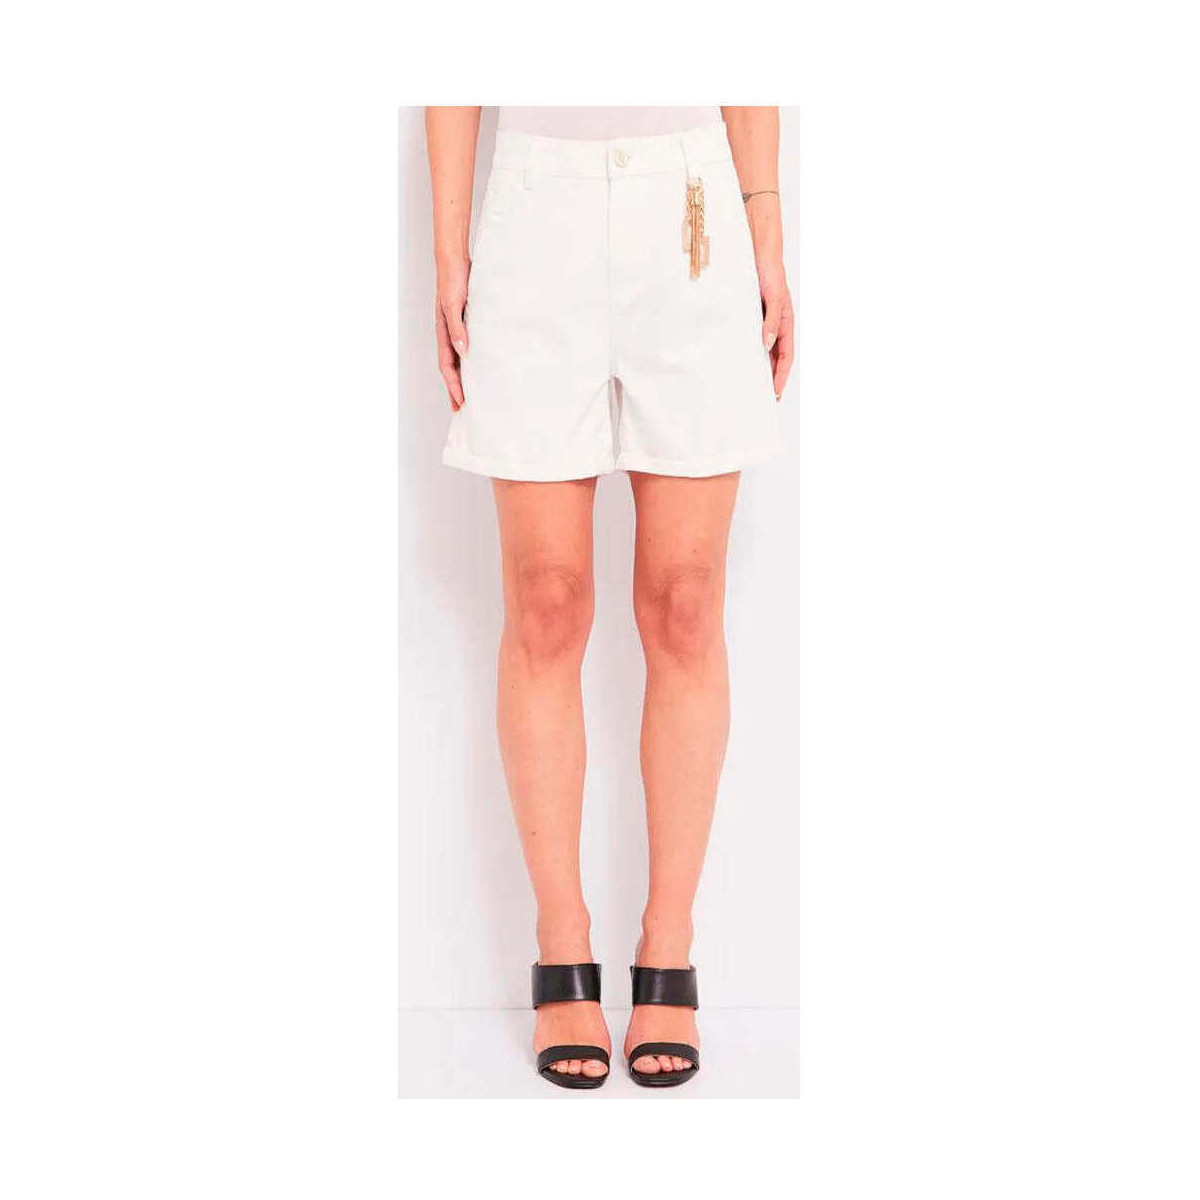 Textil Mulher Shorts / Bermudas Gaudi 411BD25027-2101-1-37 Branco